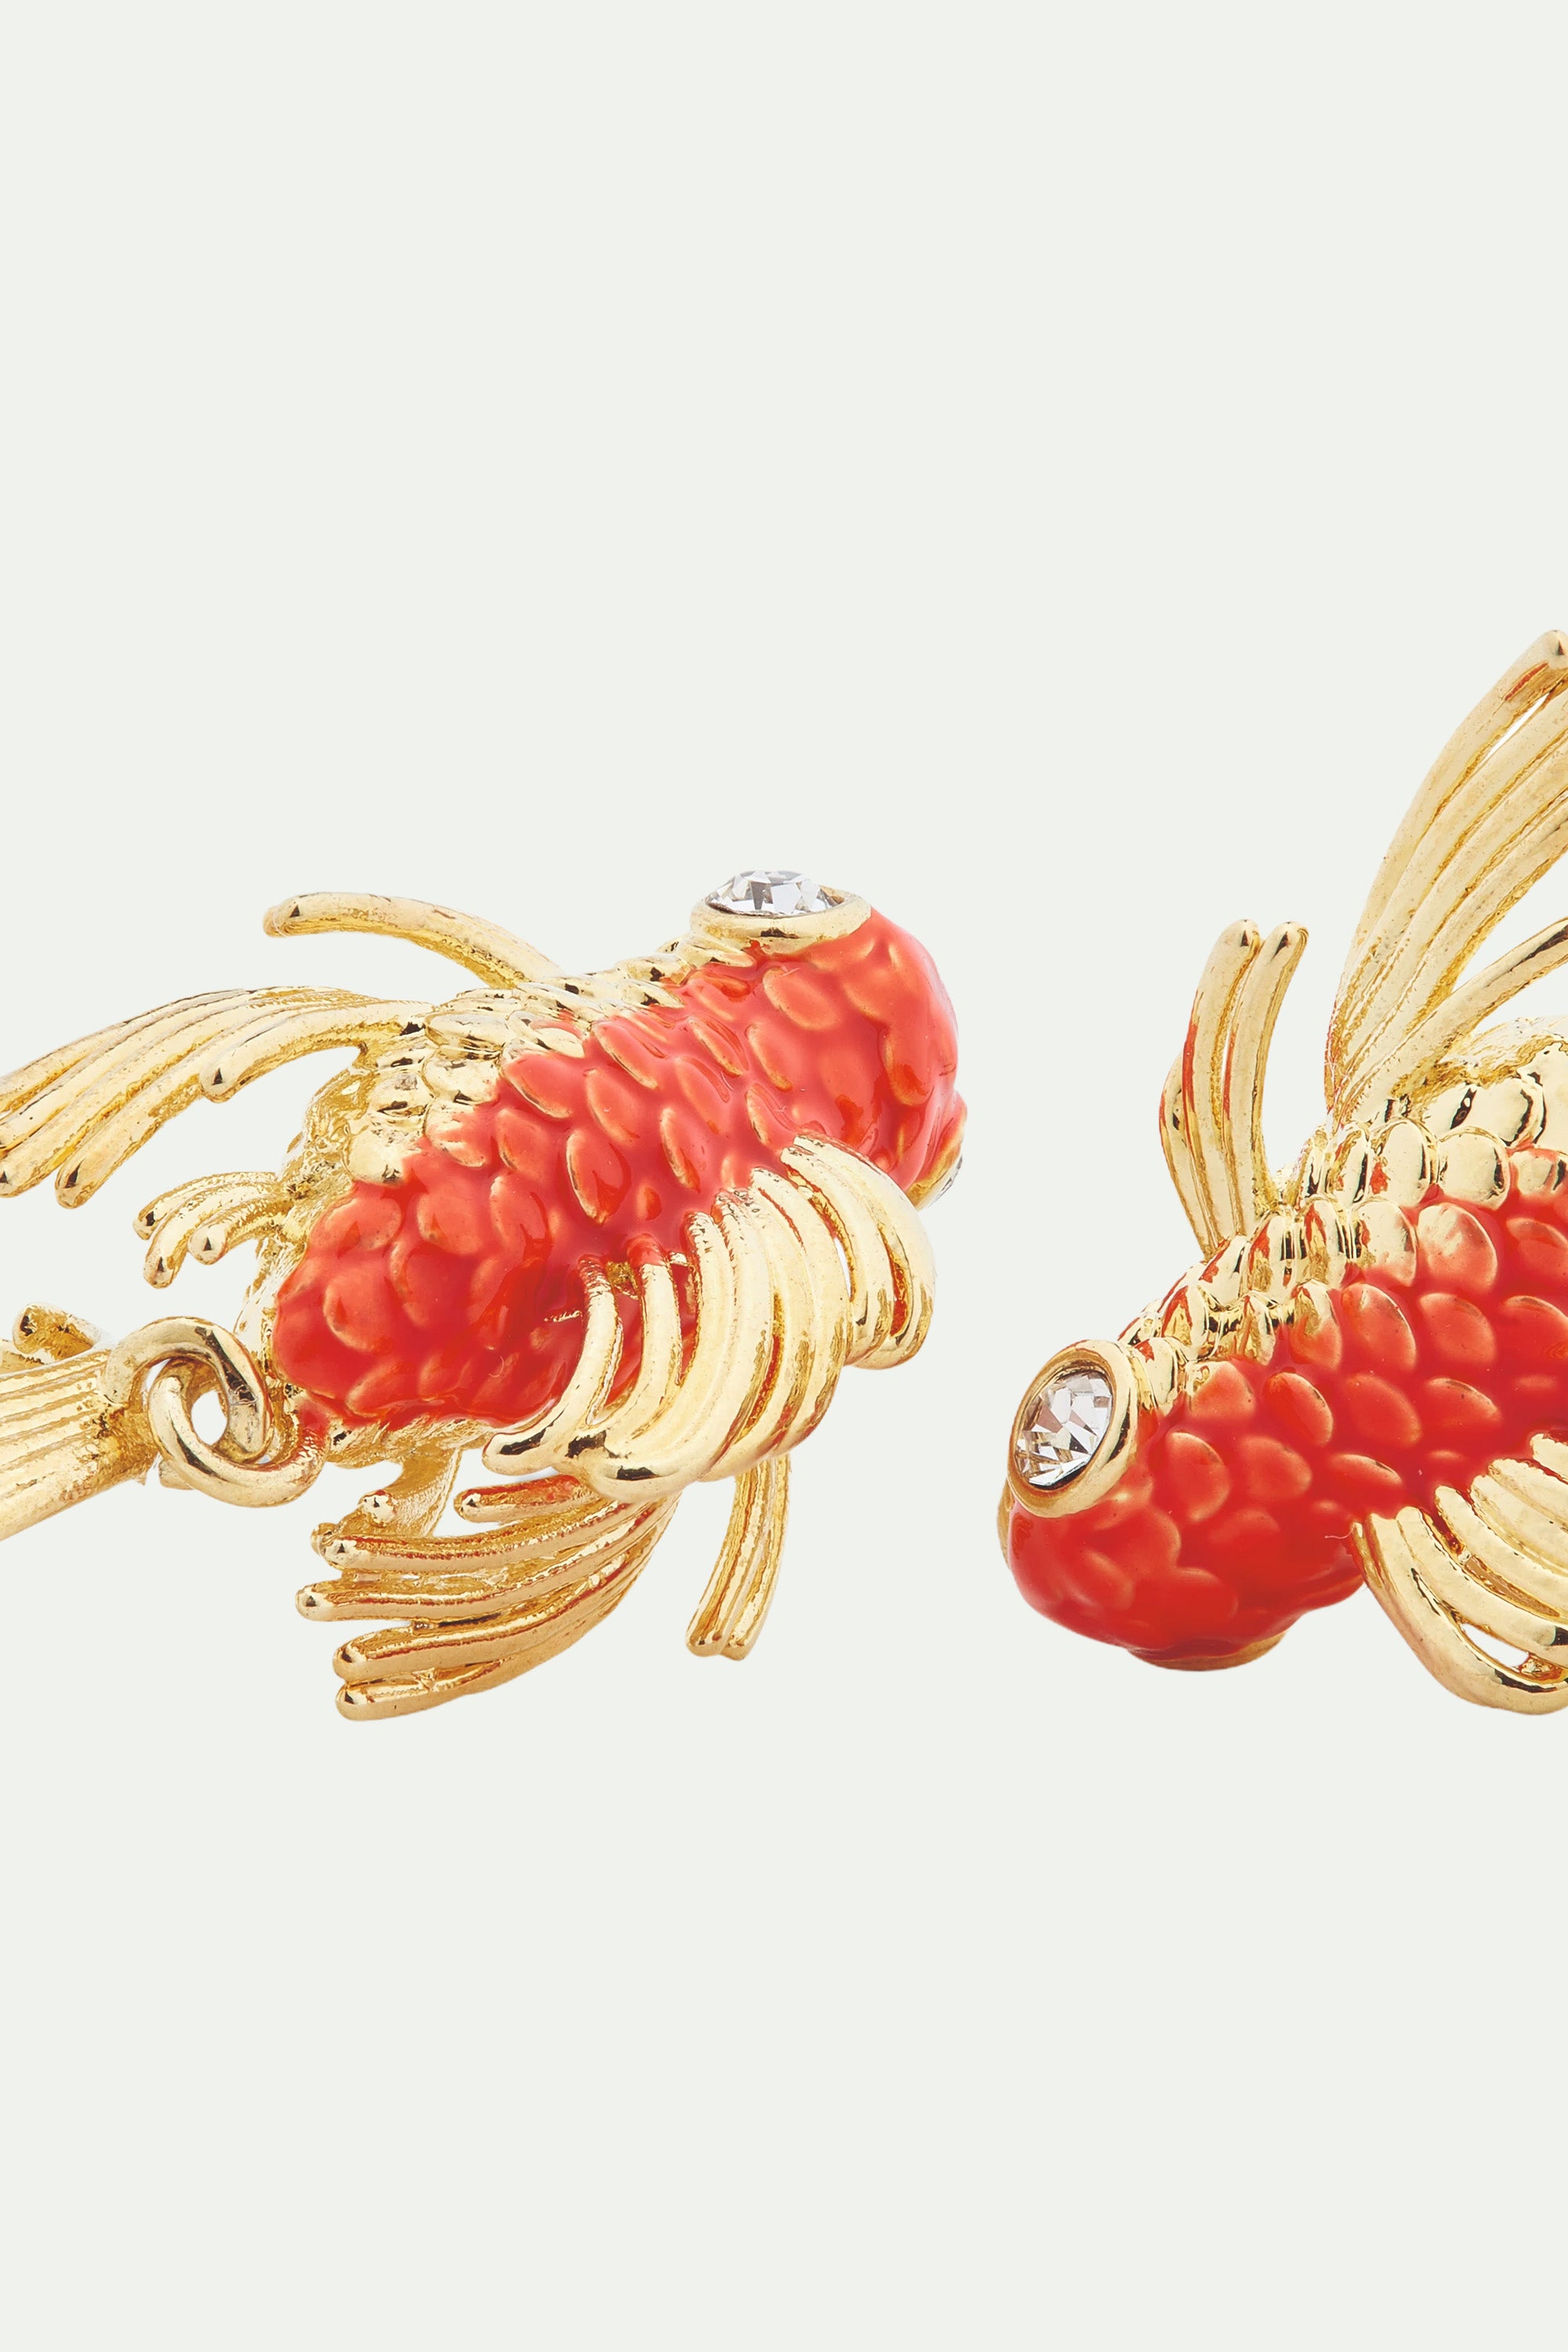 Koi fish post earrings